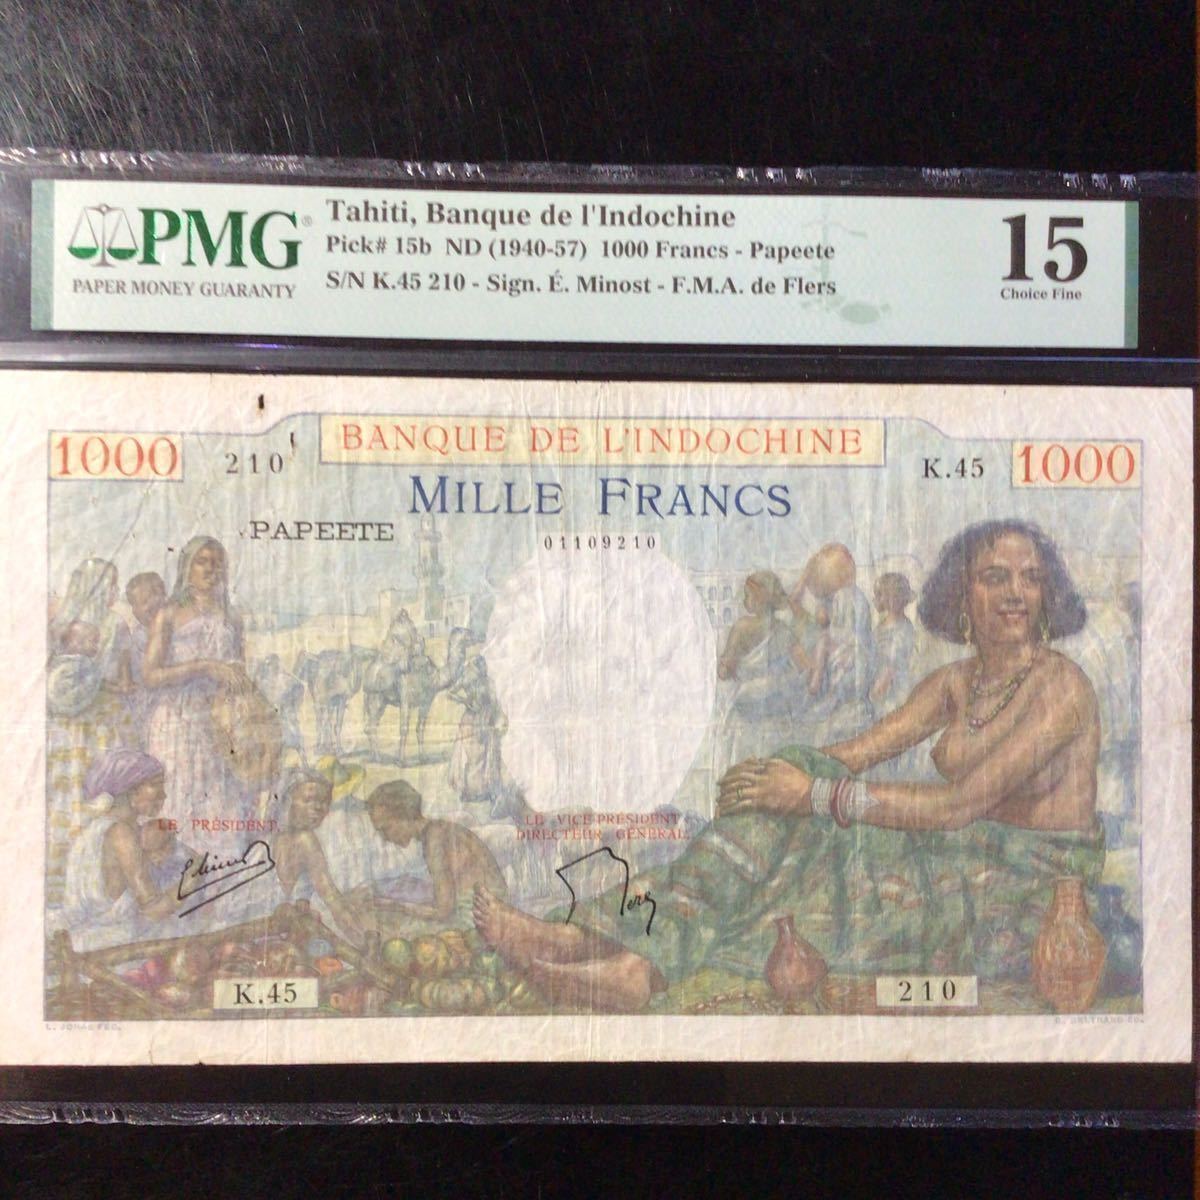 World Banknote Grading TAHITI《Banque de I´Indochine》1000 Francs【1940-57】『PMG Grading Choice Fine 15』